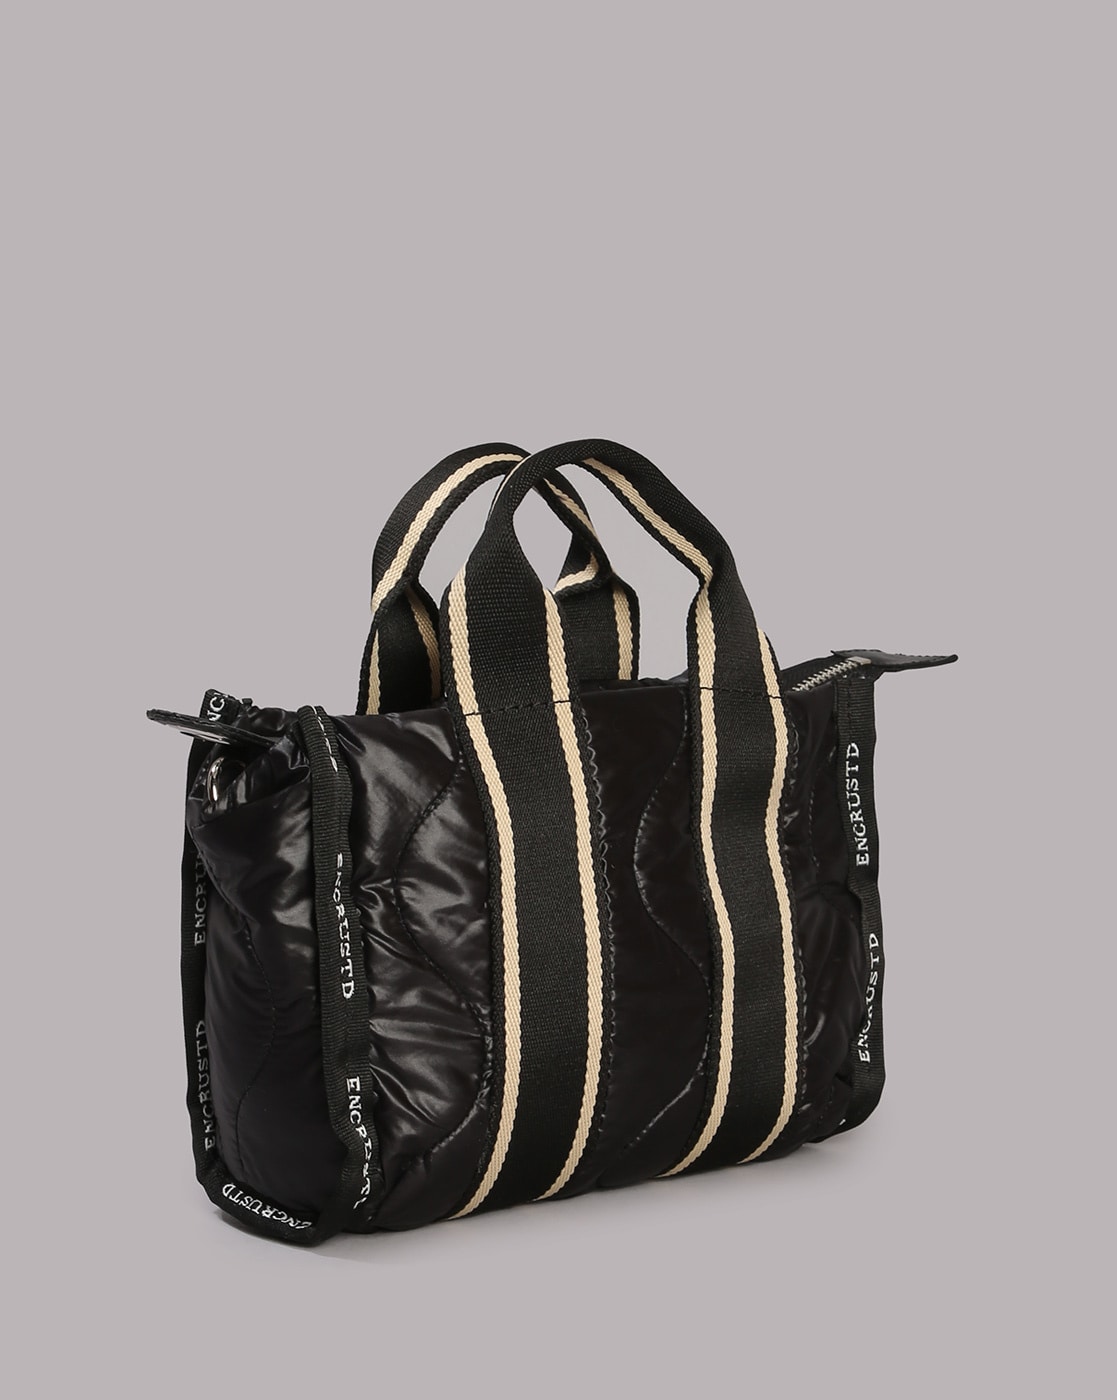 Unisex Handbags L.L.Bean Nor'Easter Tote Bag | eBay